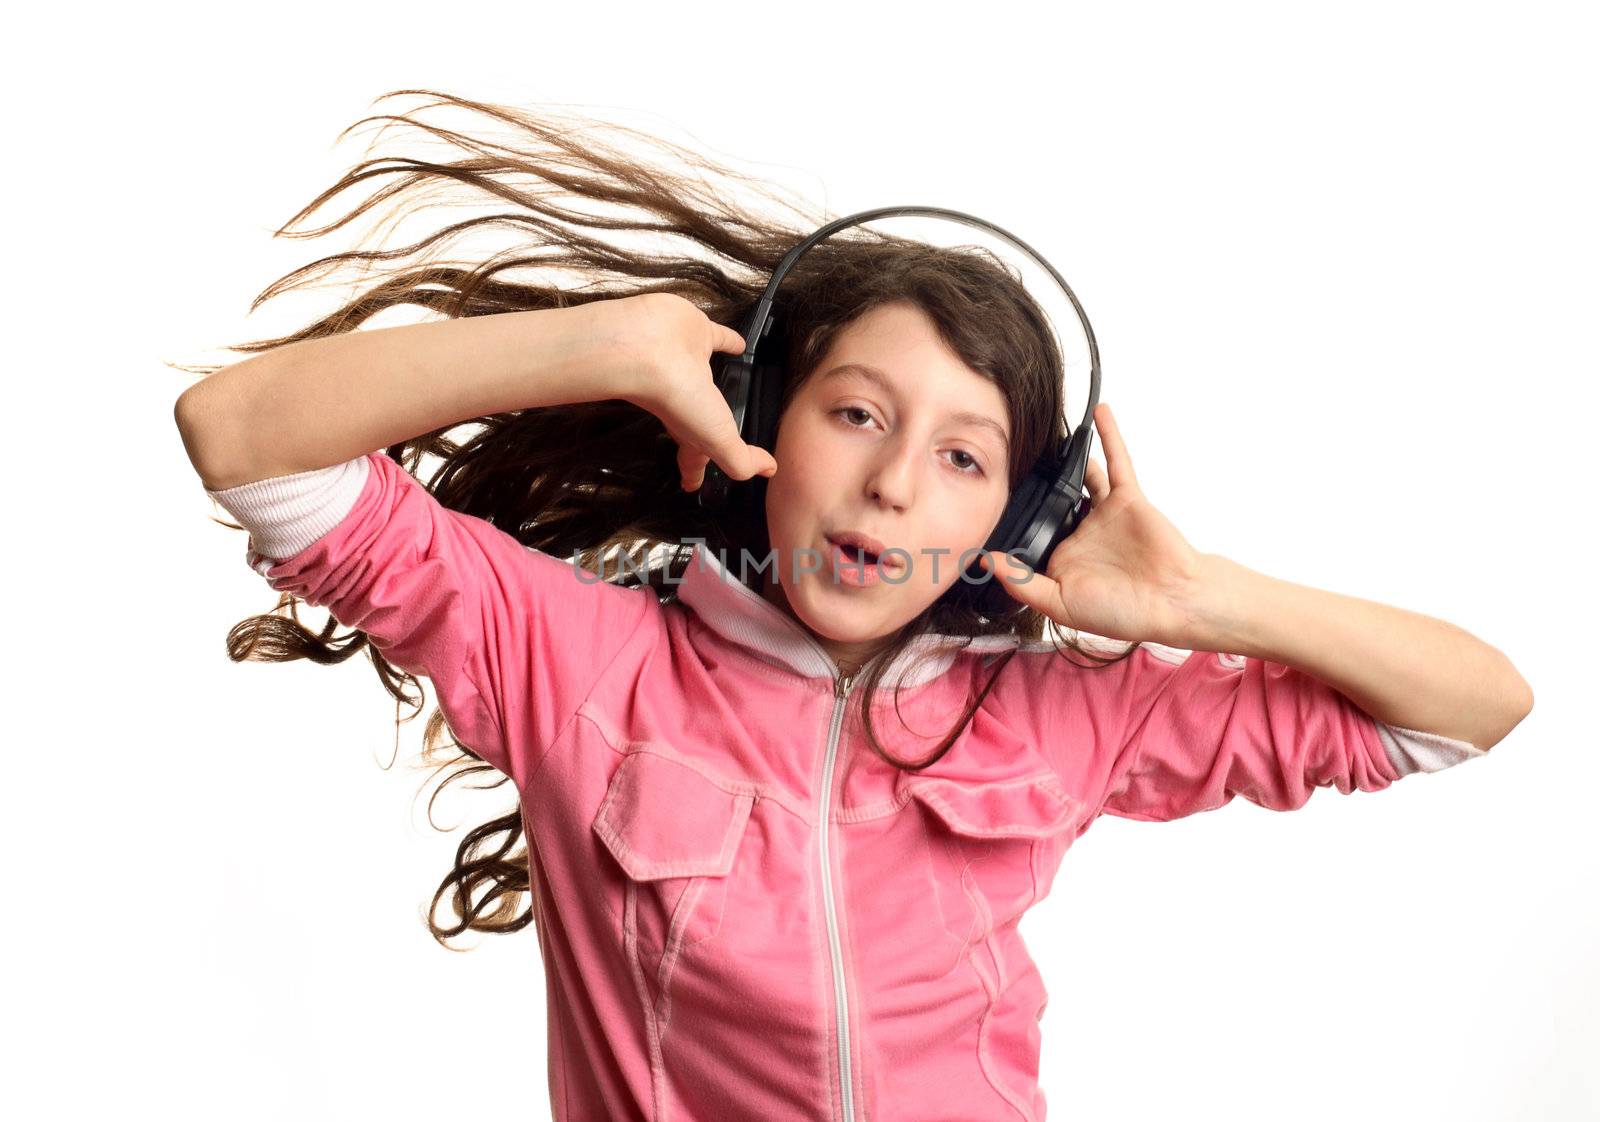 The girl in headphones by Gravicapa